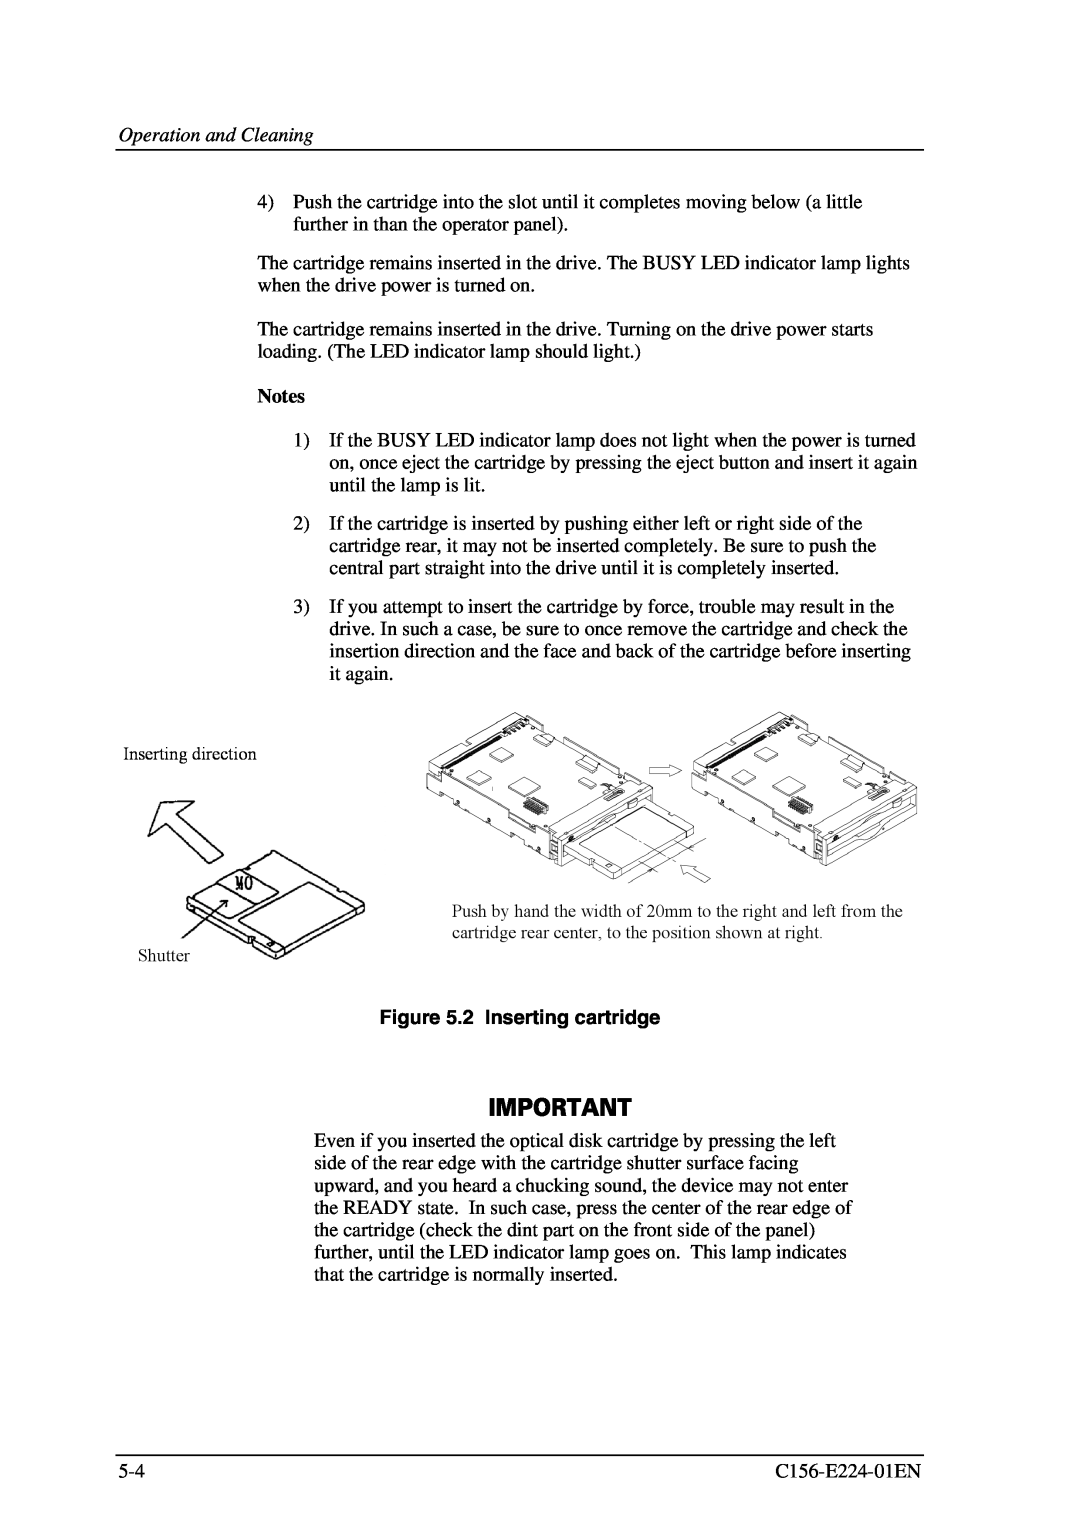 Fujitsu MCJ3230SS manual 2 Inserting cartridge, Inserting direction, Shutter 